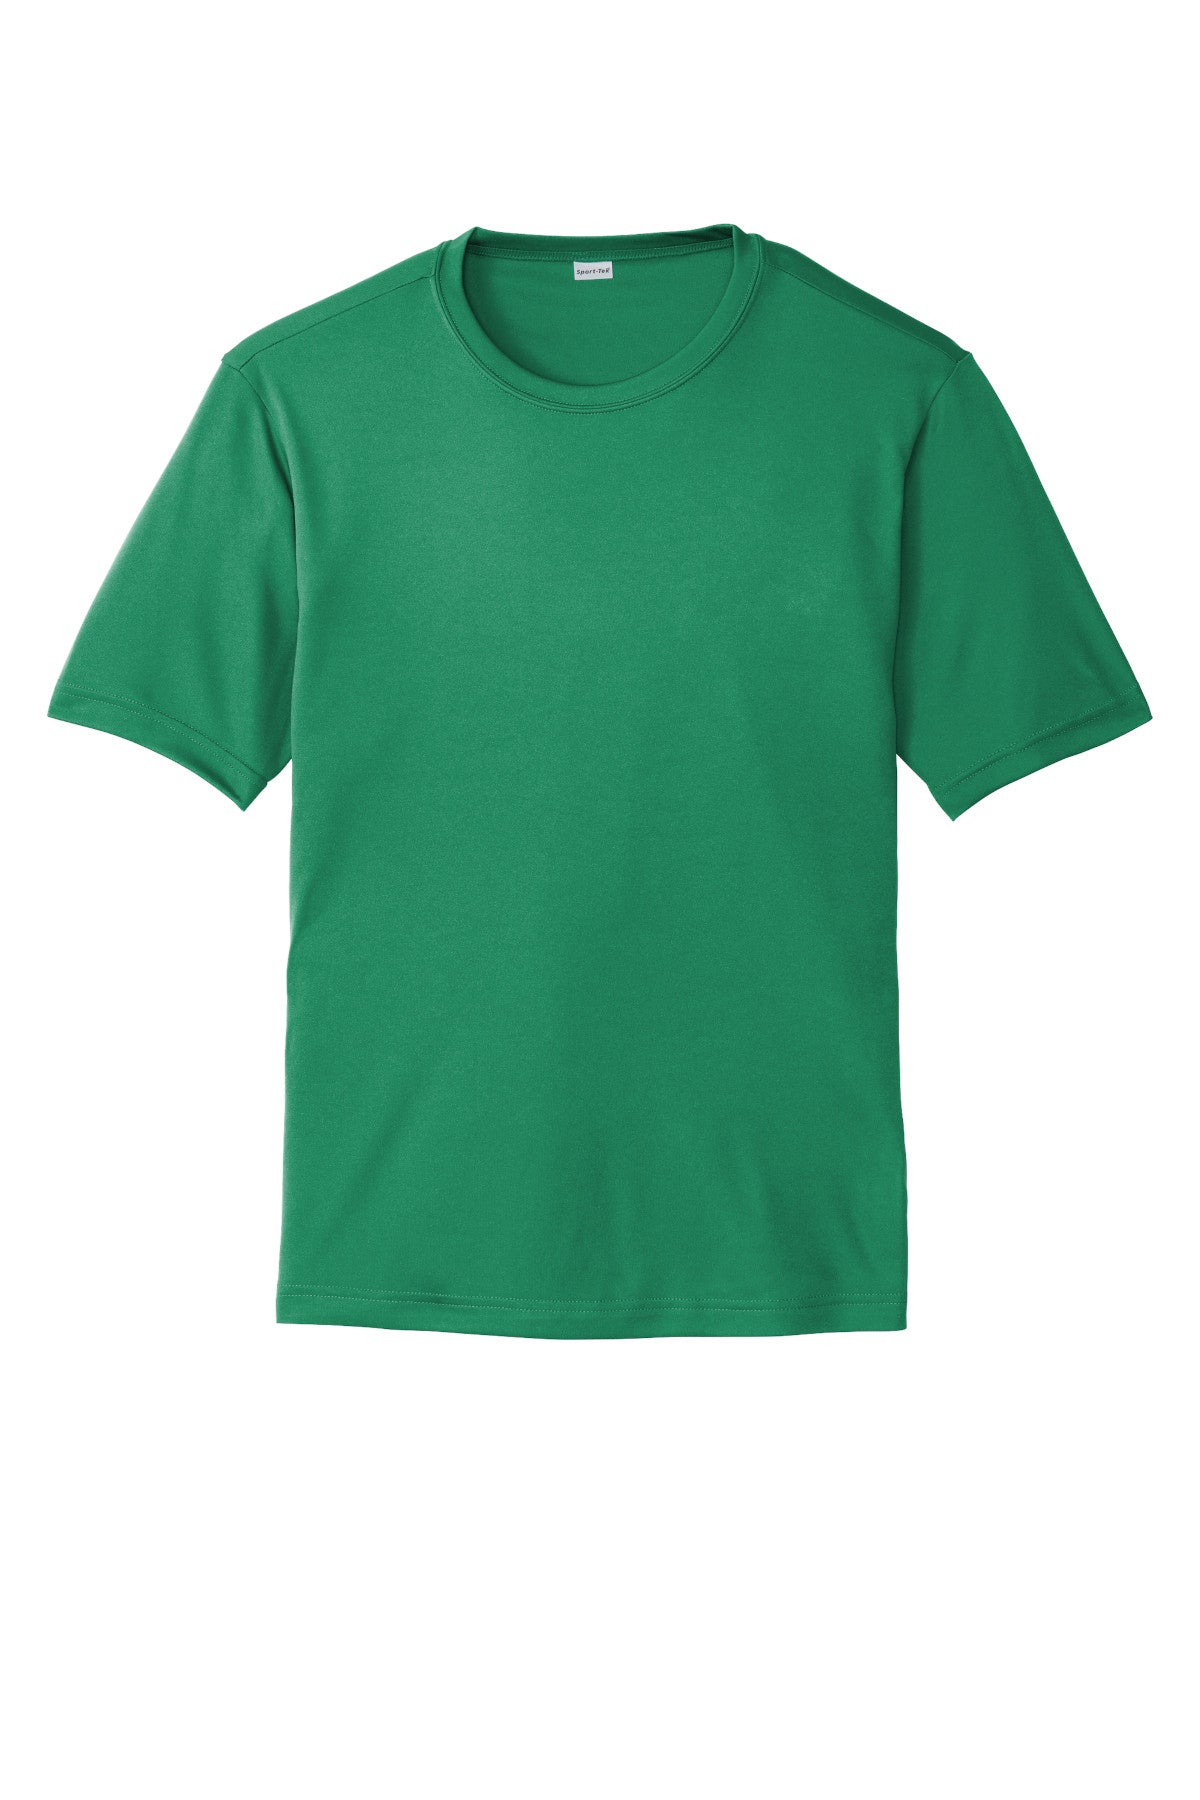 Sport-Tek St350 Polyester Adult T-Shirt Ad Small / Kelly Green